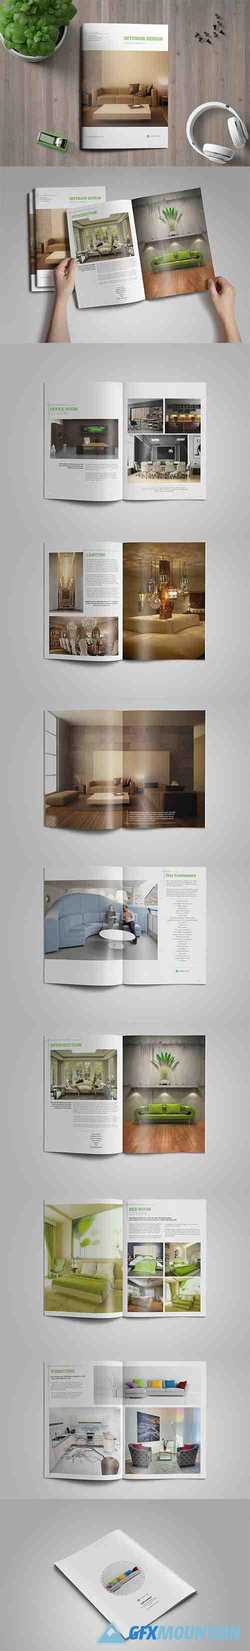 Interior Indesign Catalog/Brochure